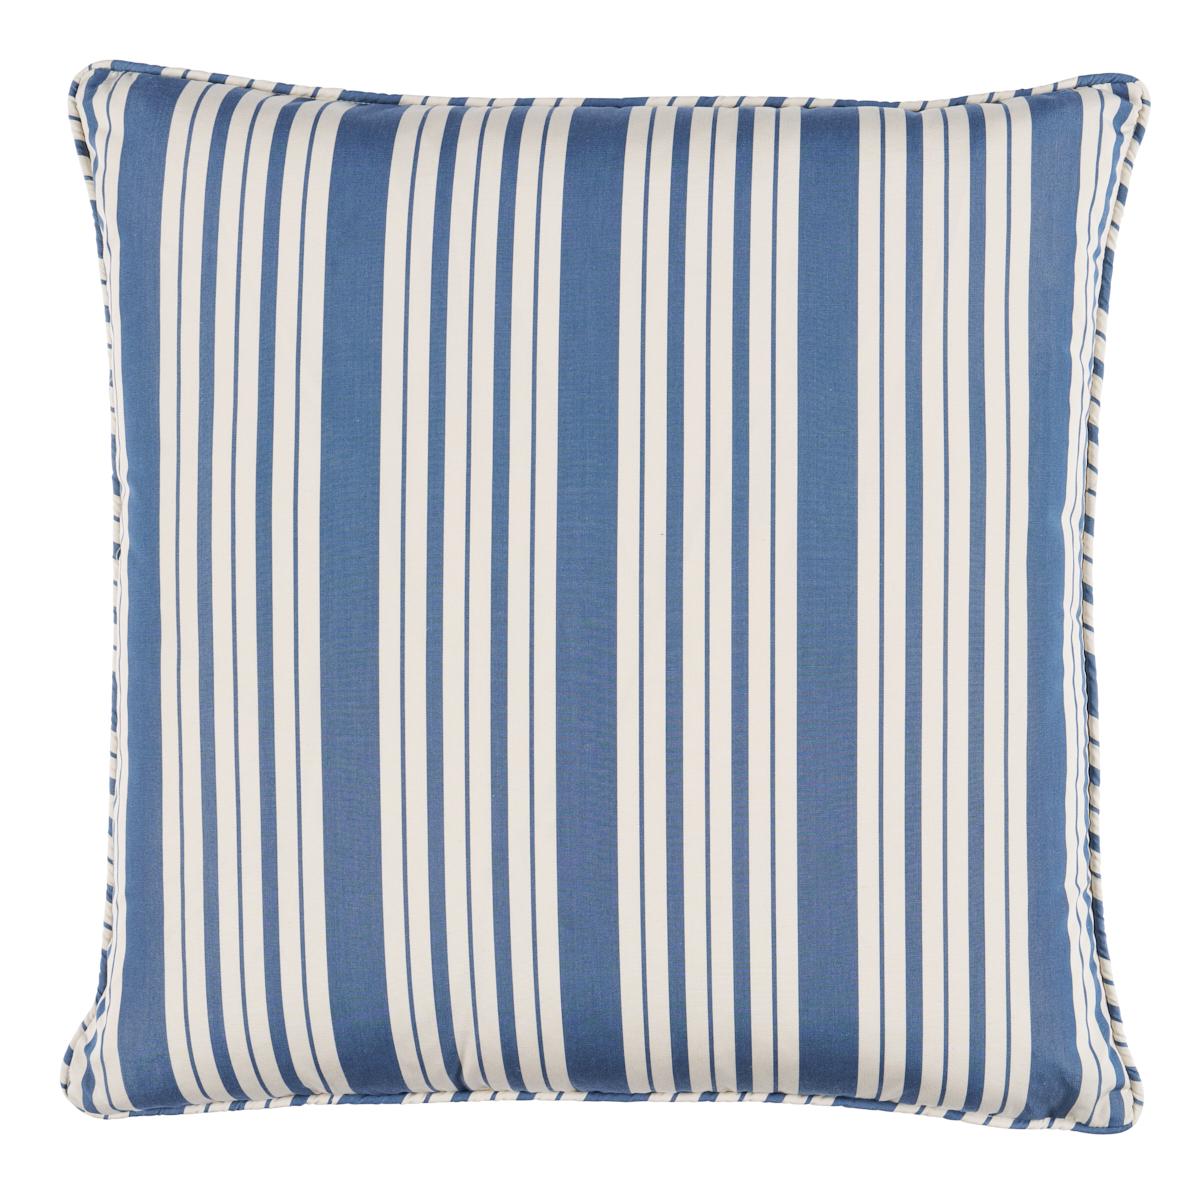 Markie Stripe Pillow in Indigo 20 x 20" For Sale